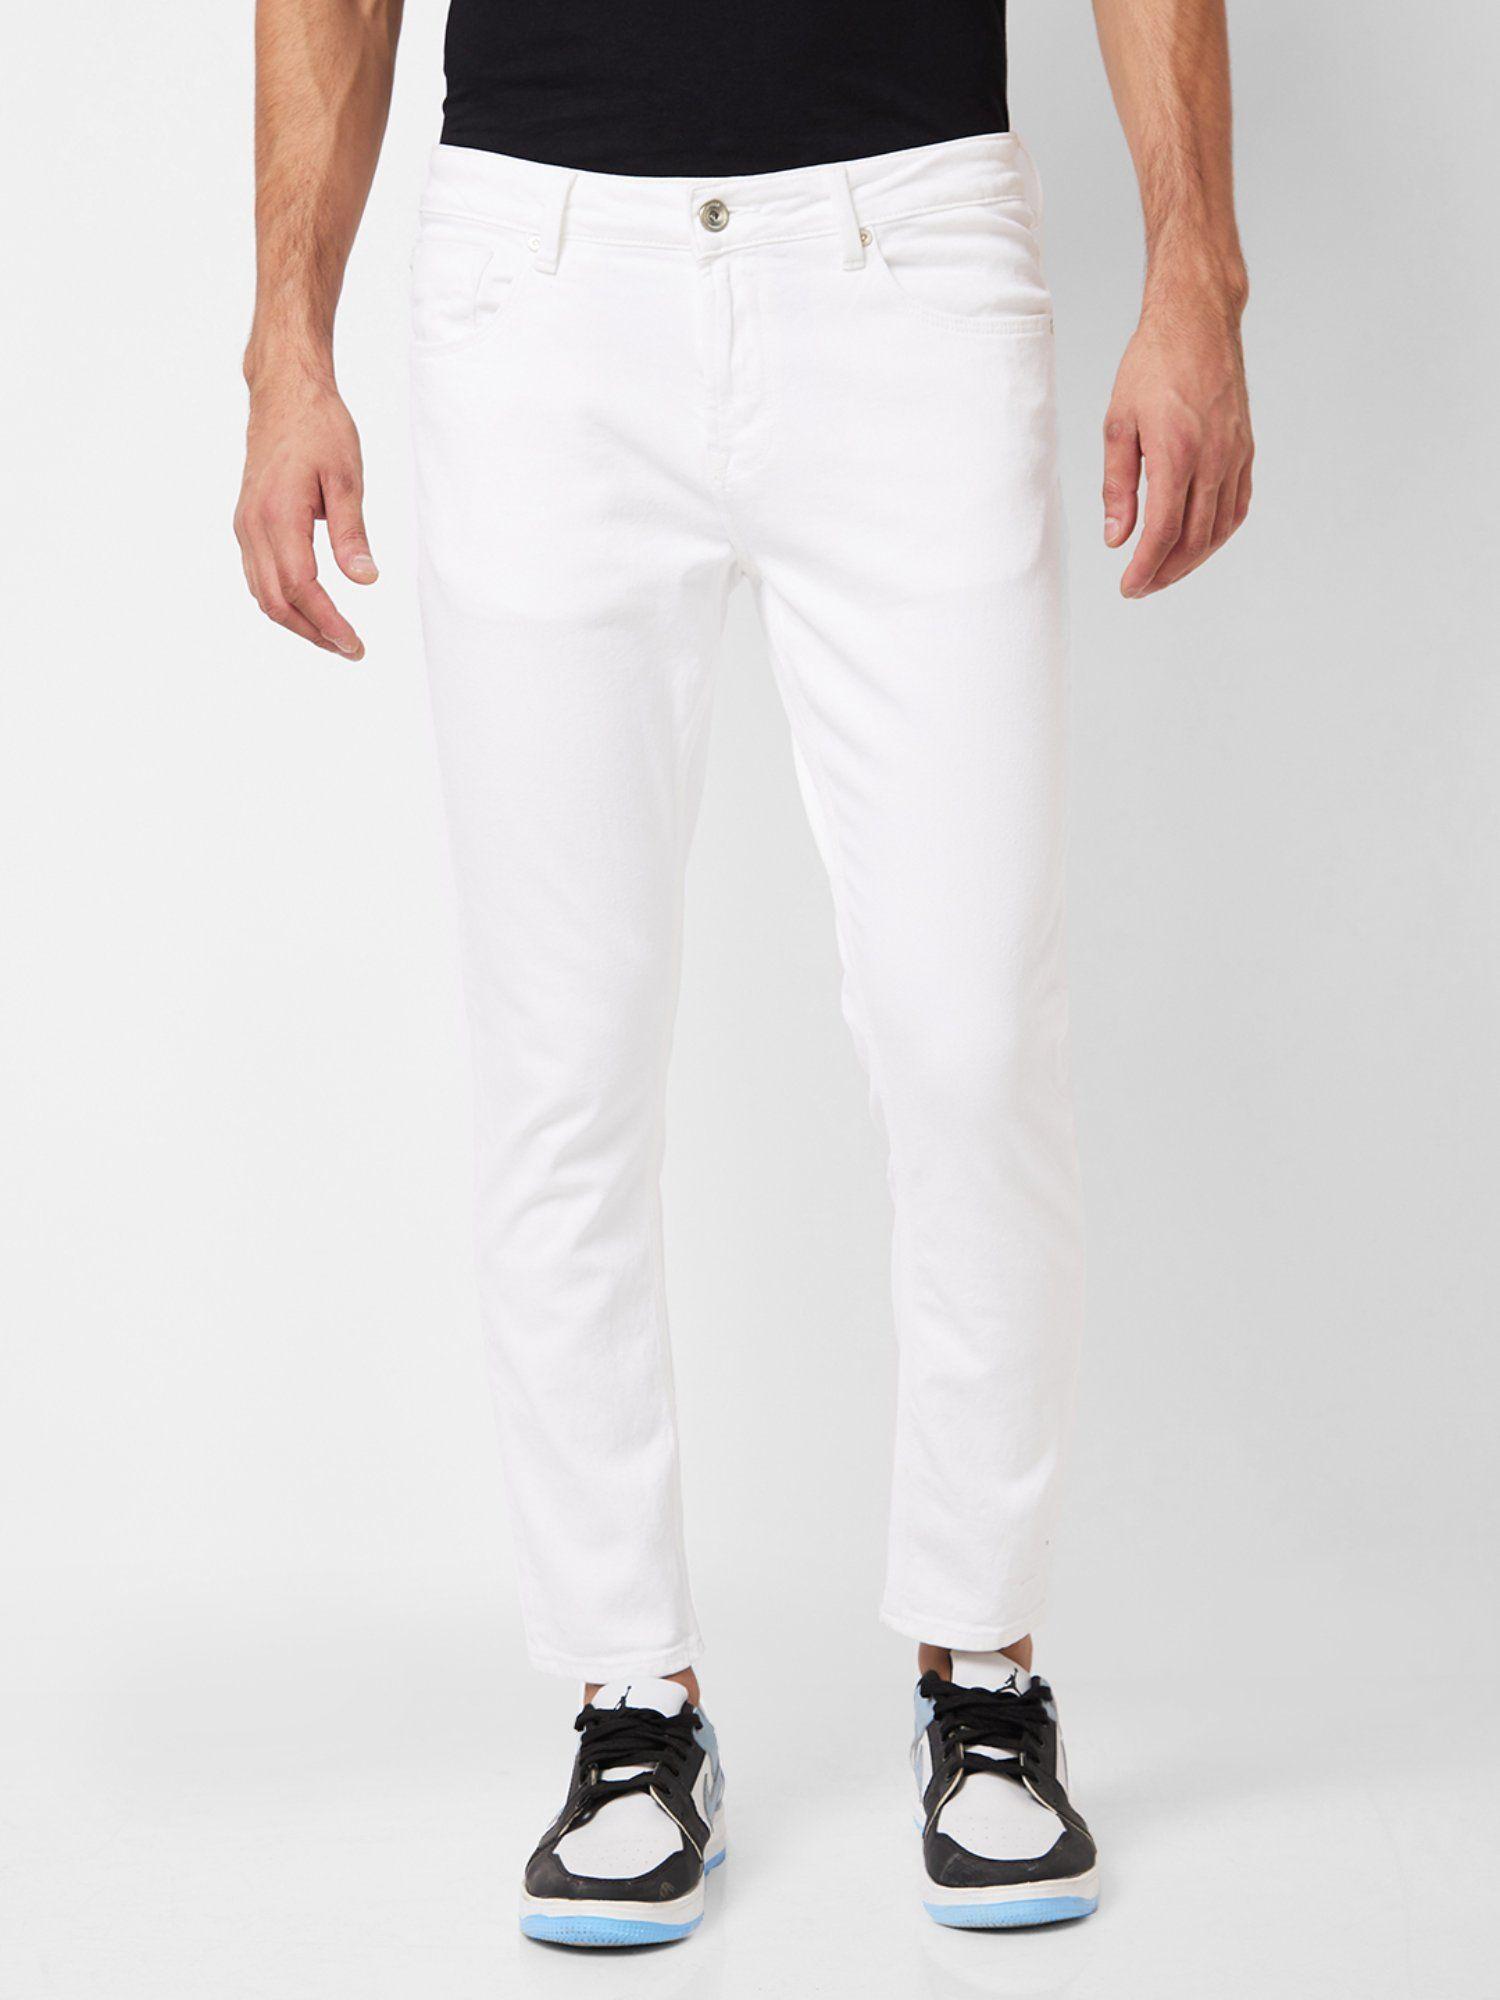 mid rise slim fit white jeans for men